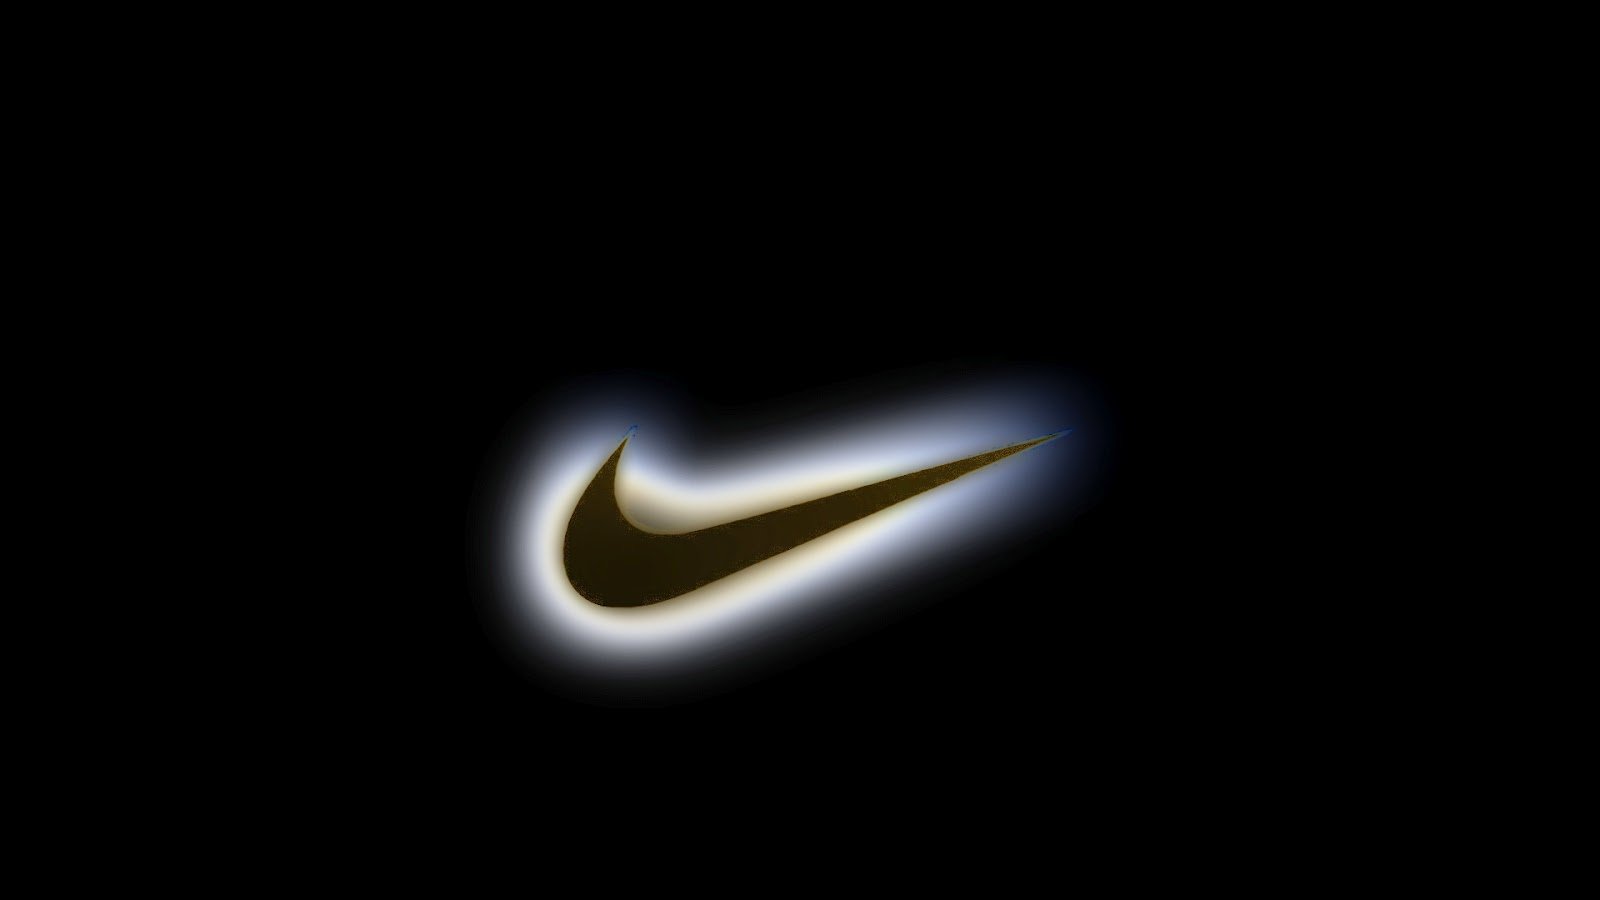 Nike Glitter Logo Wallpapers